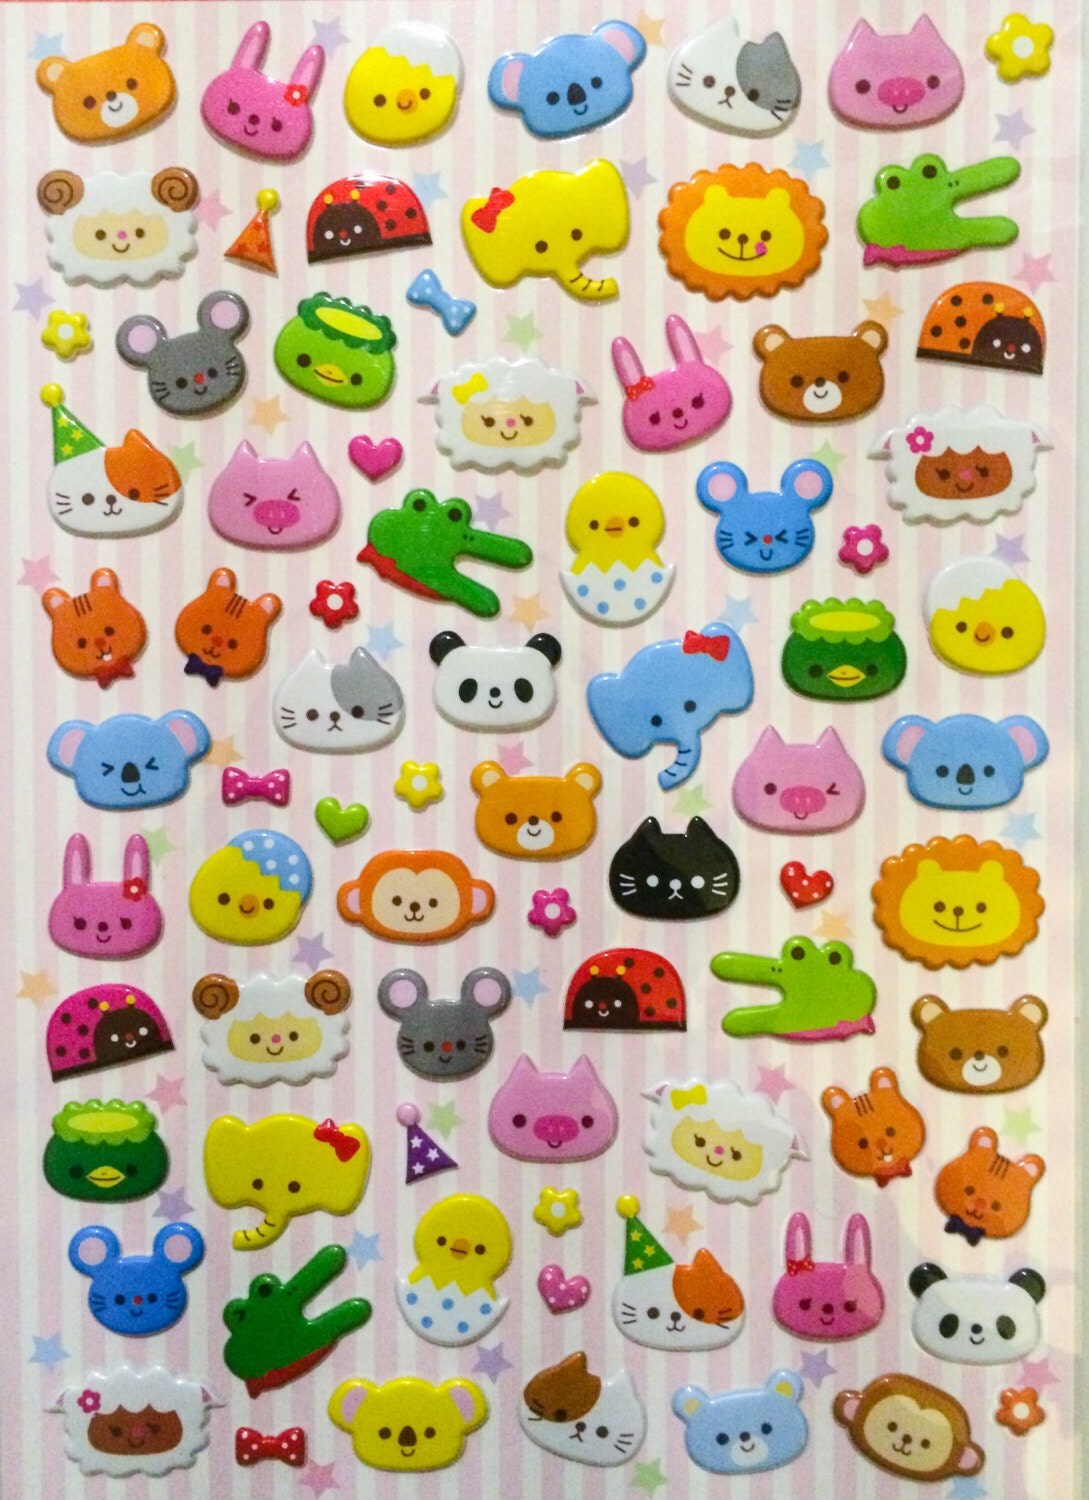 Cute Animal Stickers Japanese Kawaii by PasoKuma on Etsy